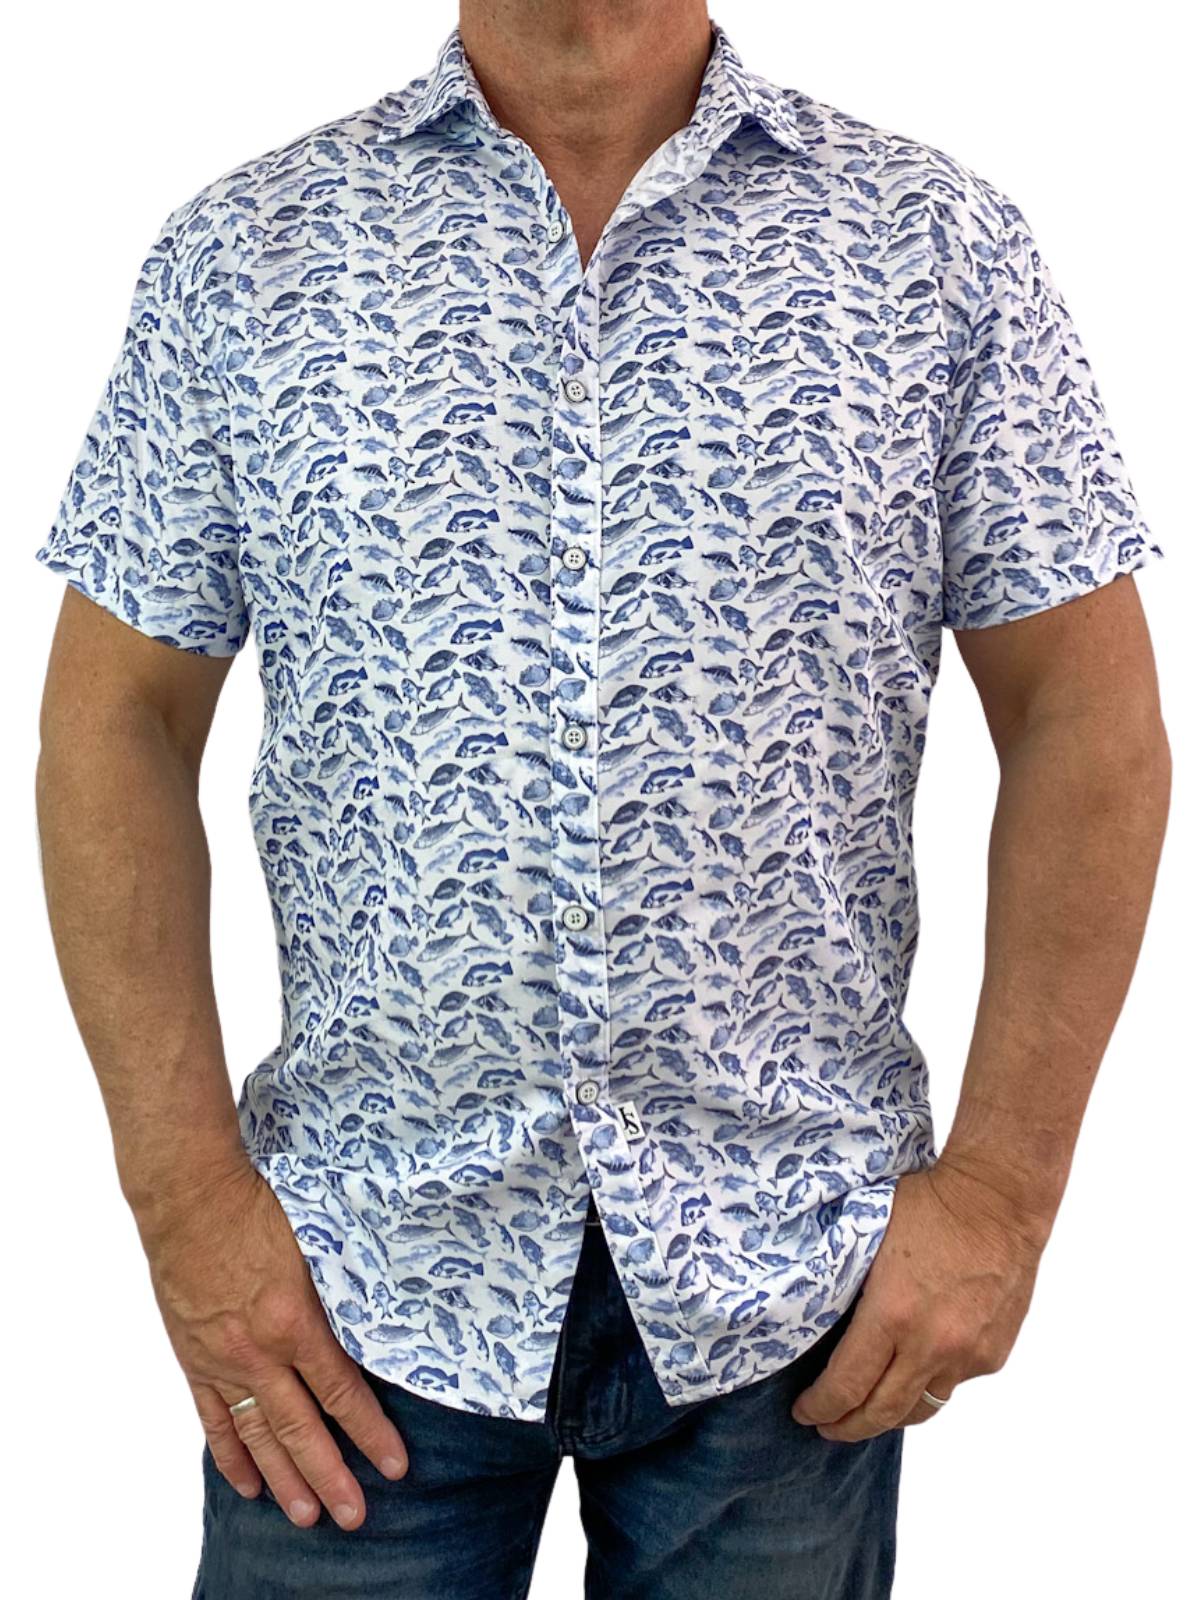 Bluefin Abstract Cotton/Rayon Short Sleeve Shirt - Blue